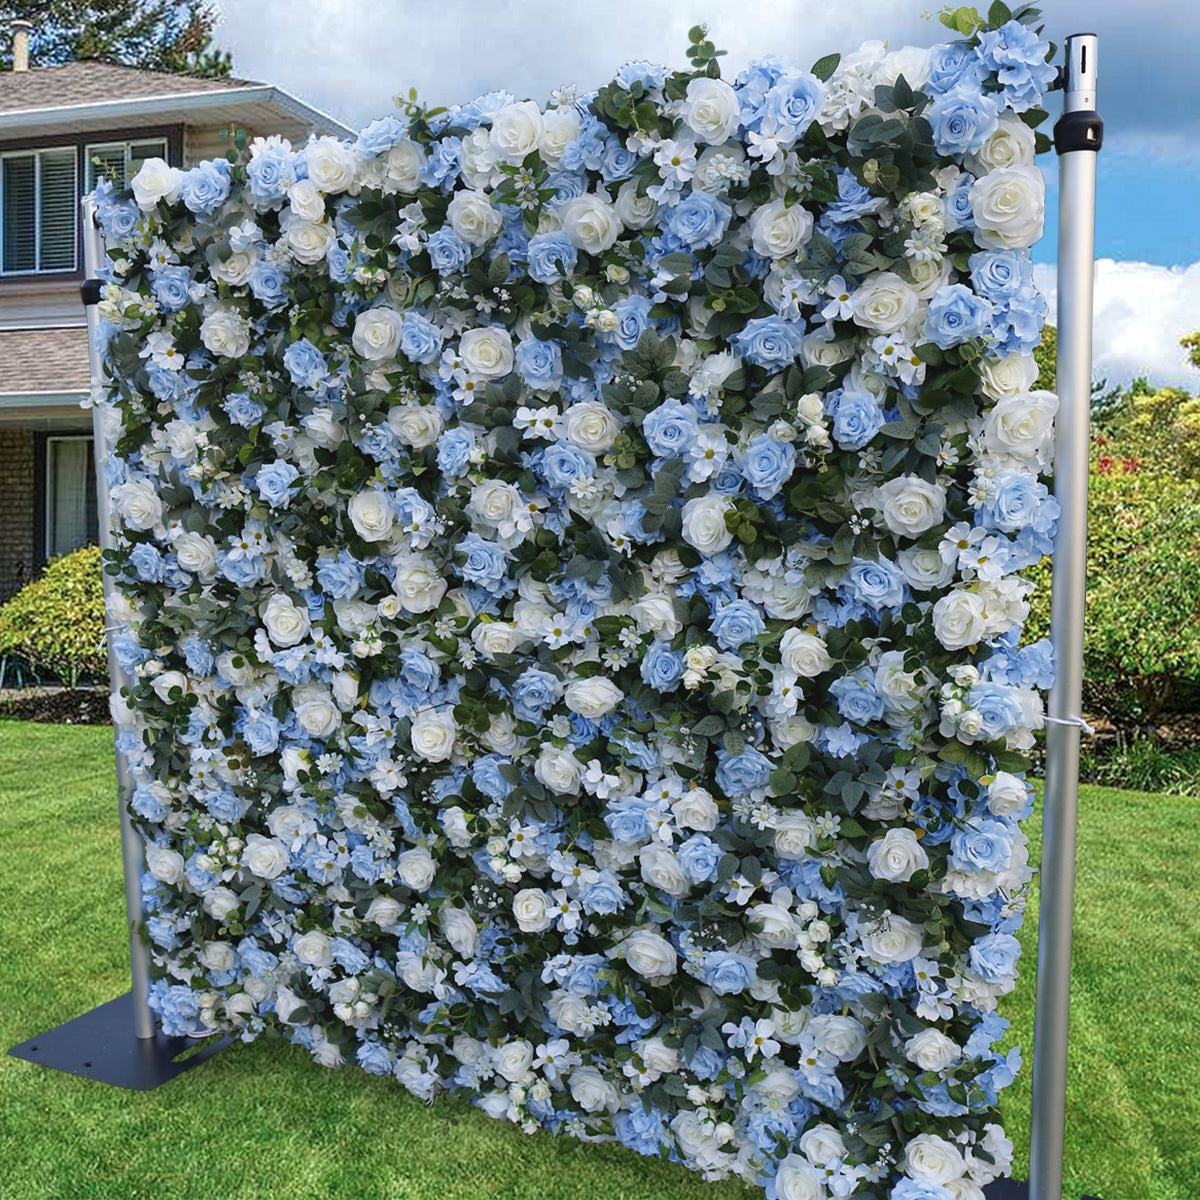 5D Artificial Flower Wall Arrangement Wedding Party Birthday Backdrop Decor HQ9039